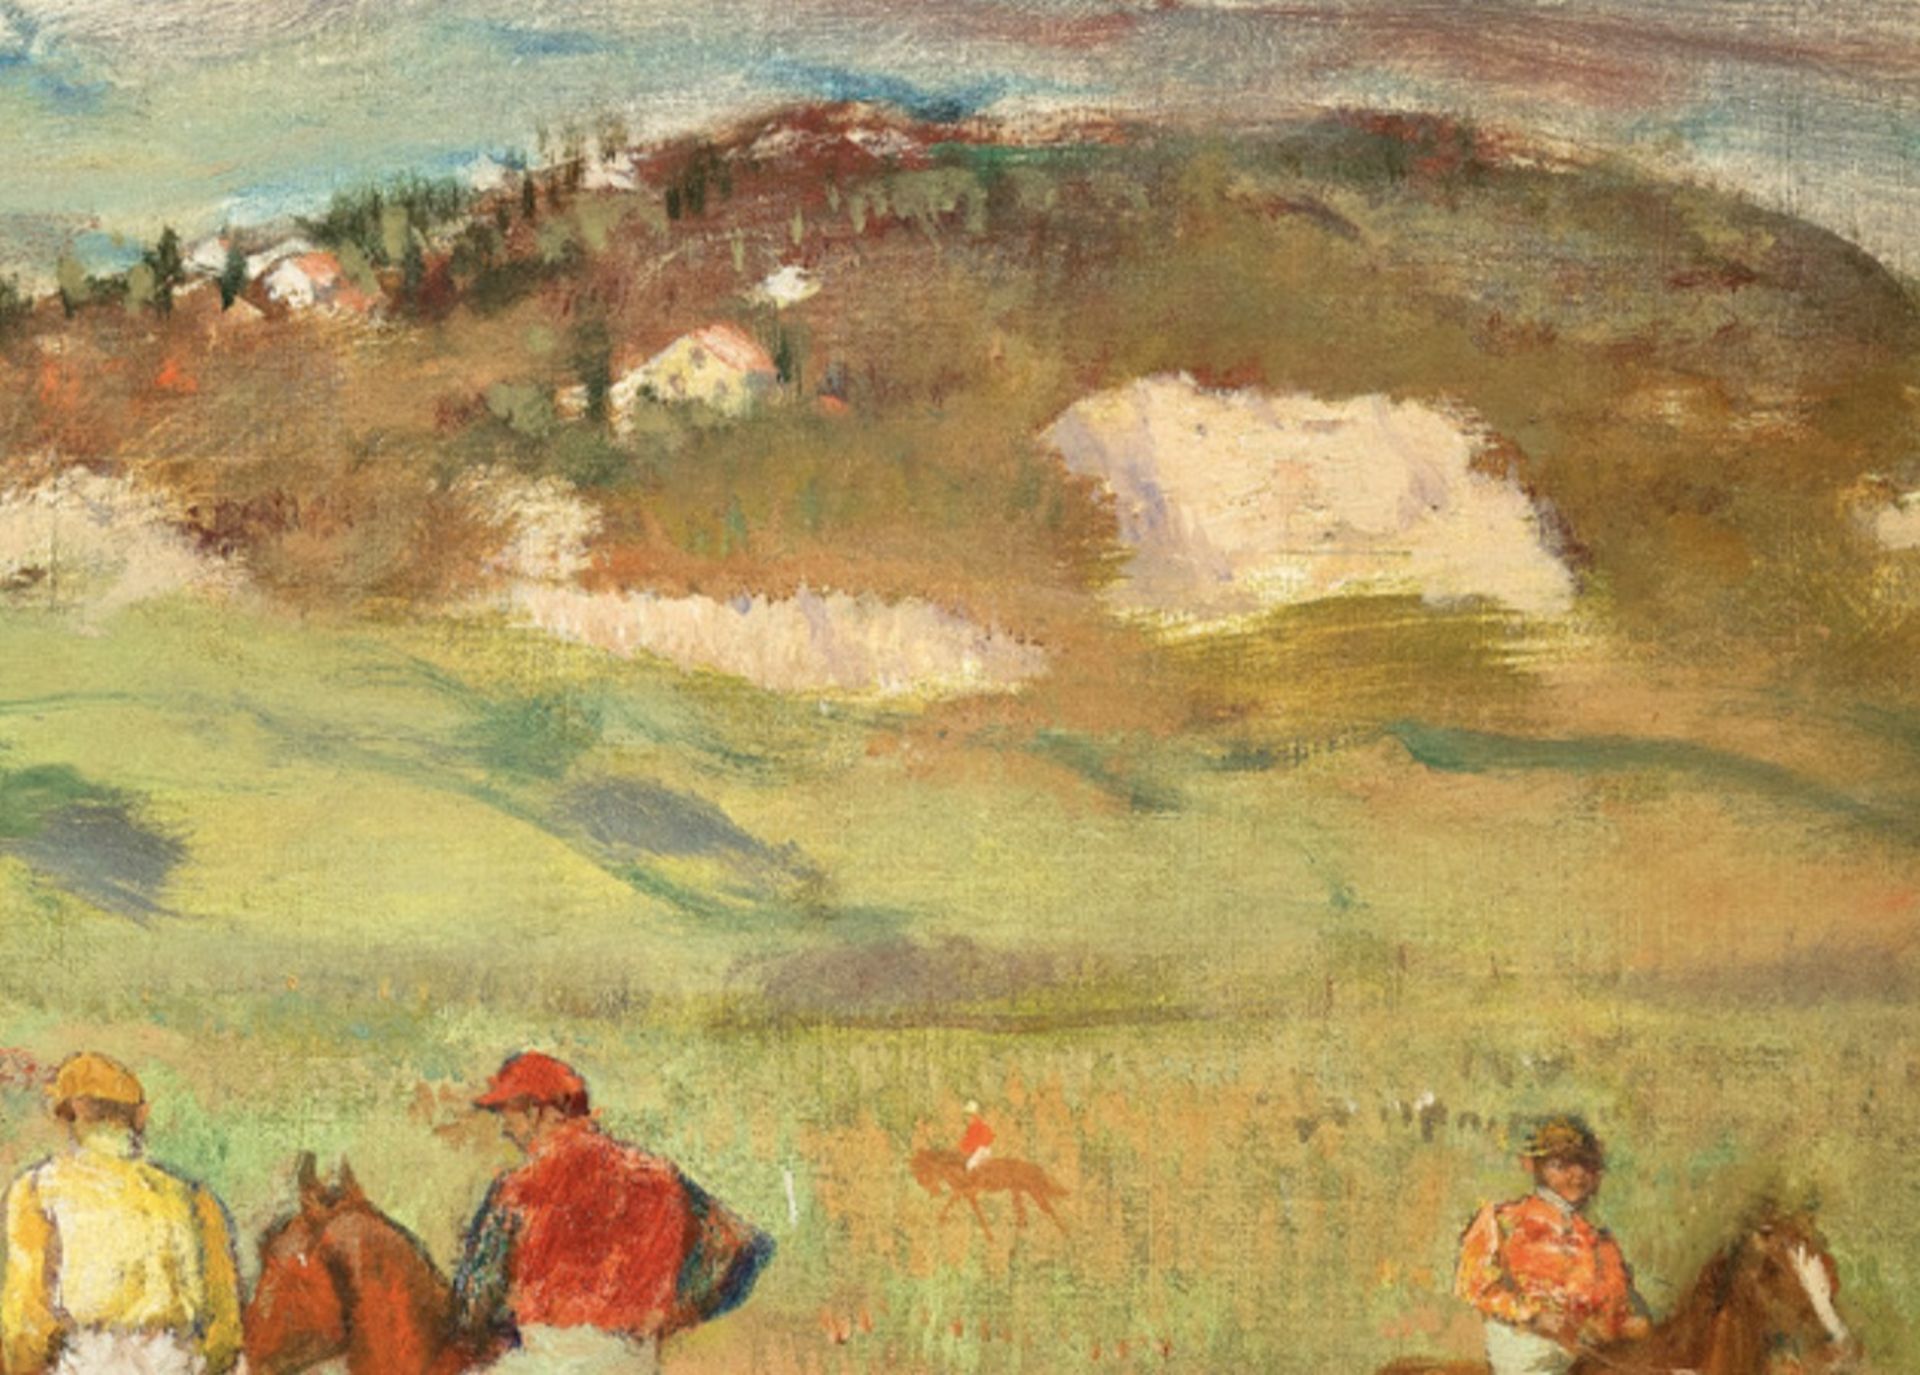 Edgar Degas "Jockeys on Horseback, Distant Hills" Wallpaper - Image 3 of 6